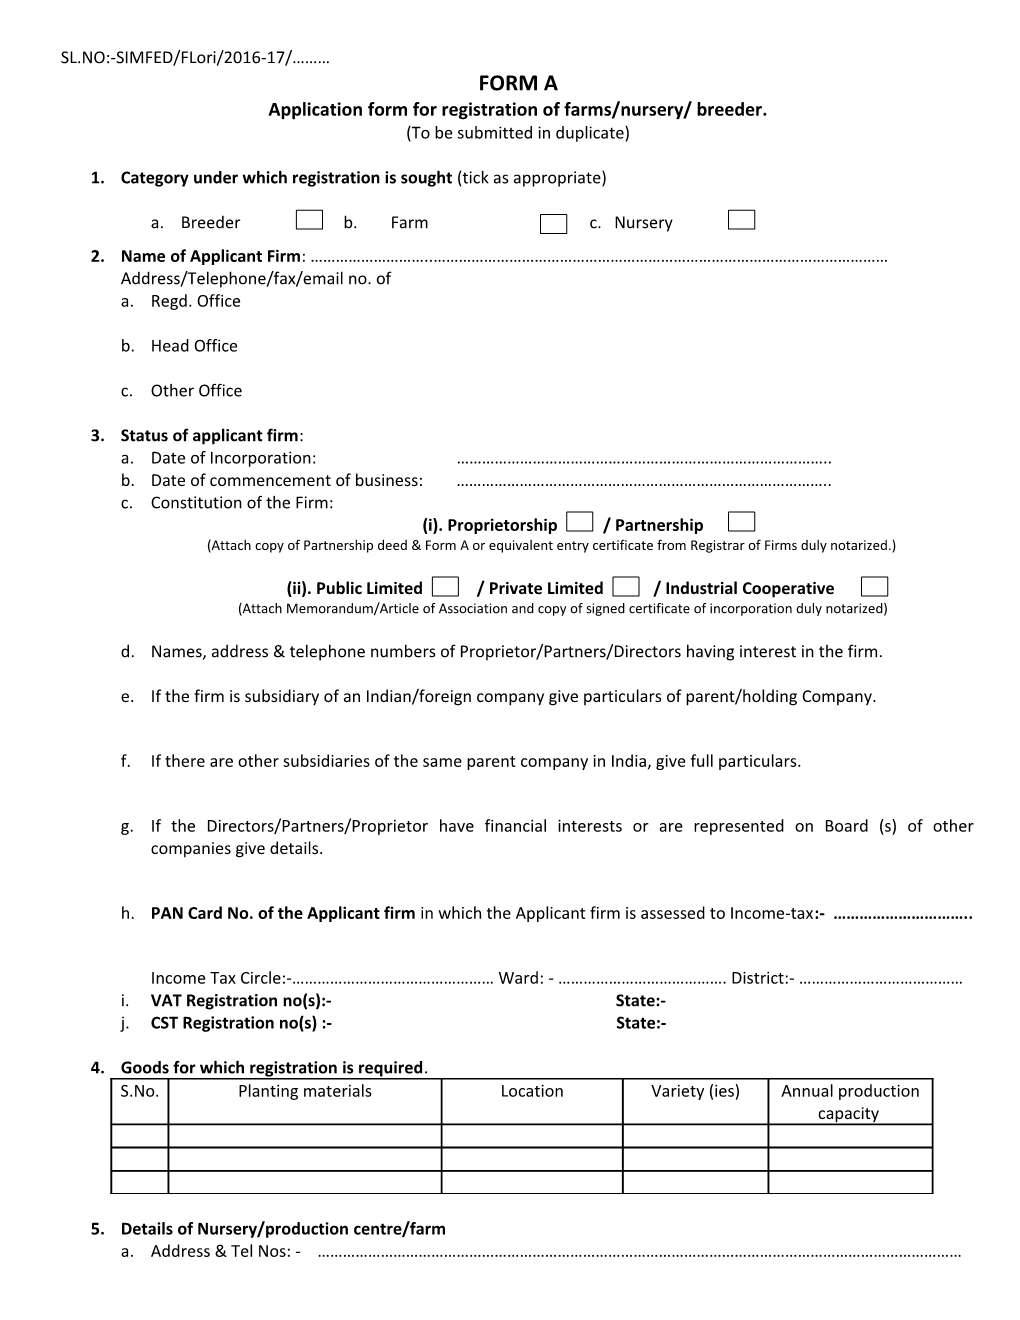 Application Form for Registration of Farms/Nursery/ Breeder